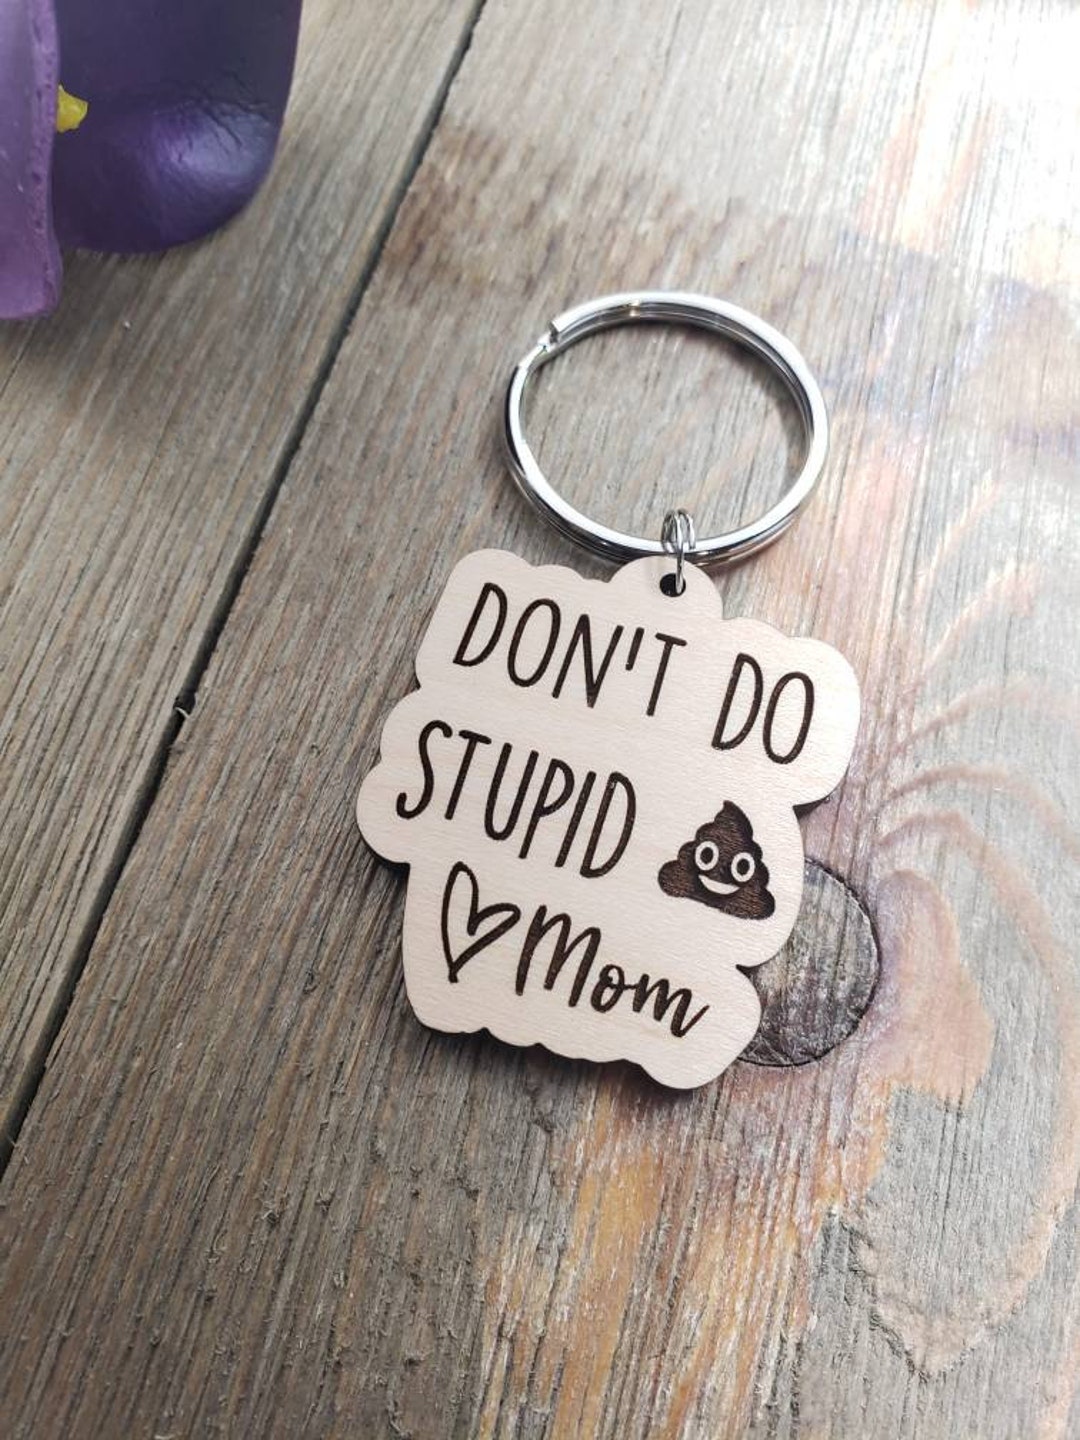 Don't do Stupid Shit Wood keychain, Love Mom, Graduation Gift